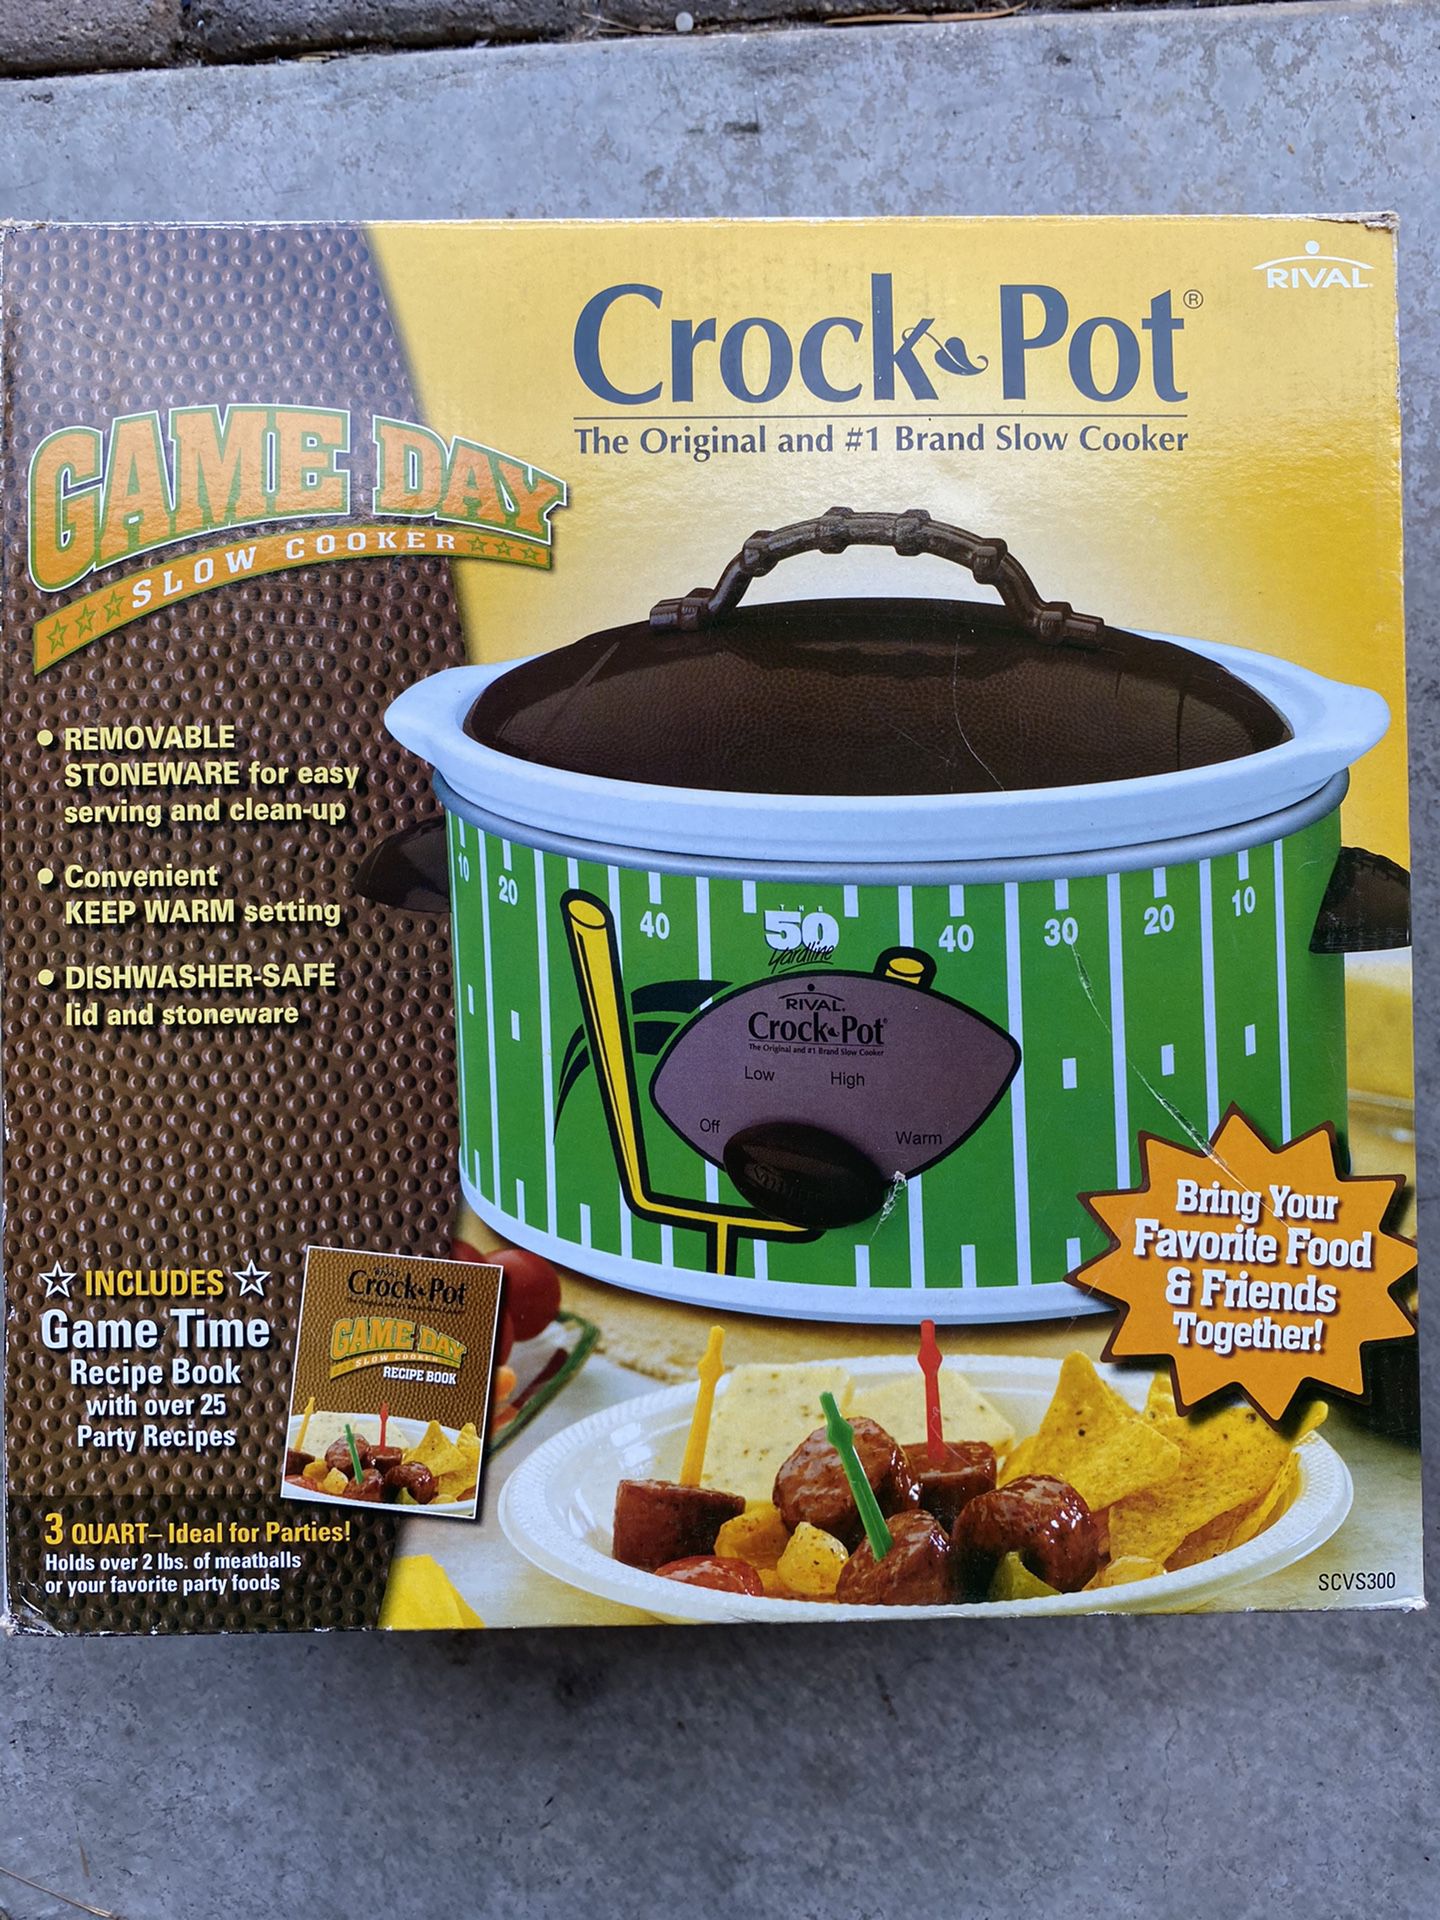 Brand new 3 quart Crock Pot slow cooker